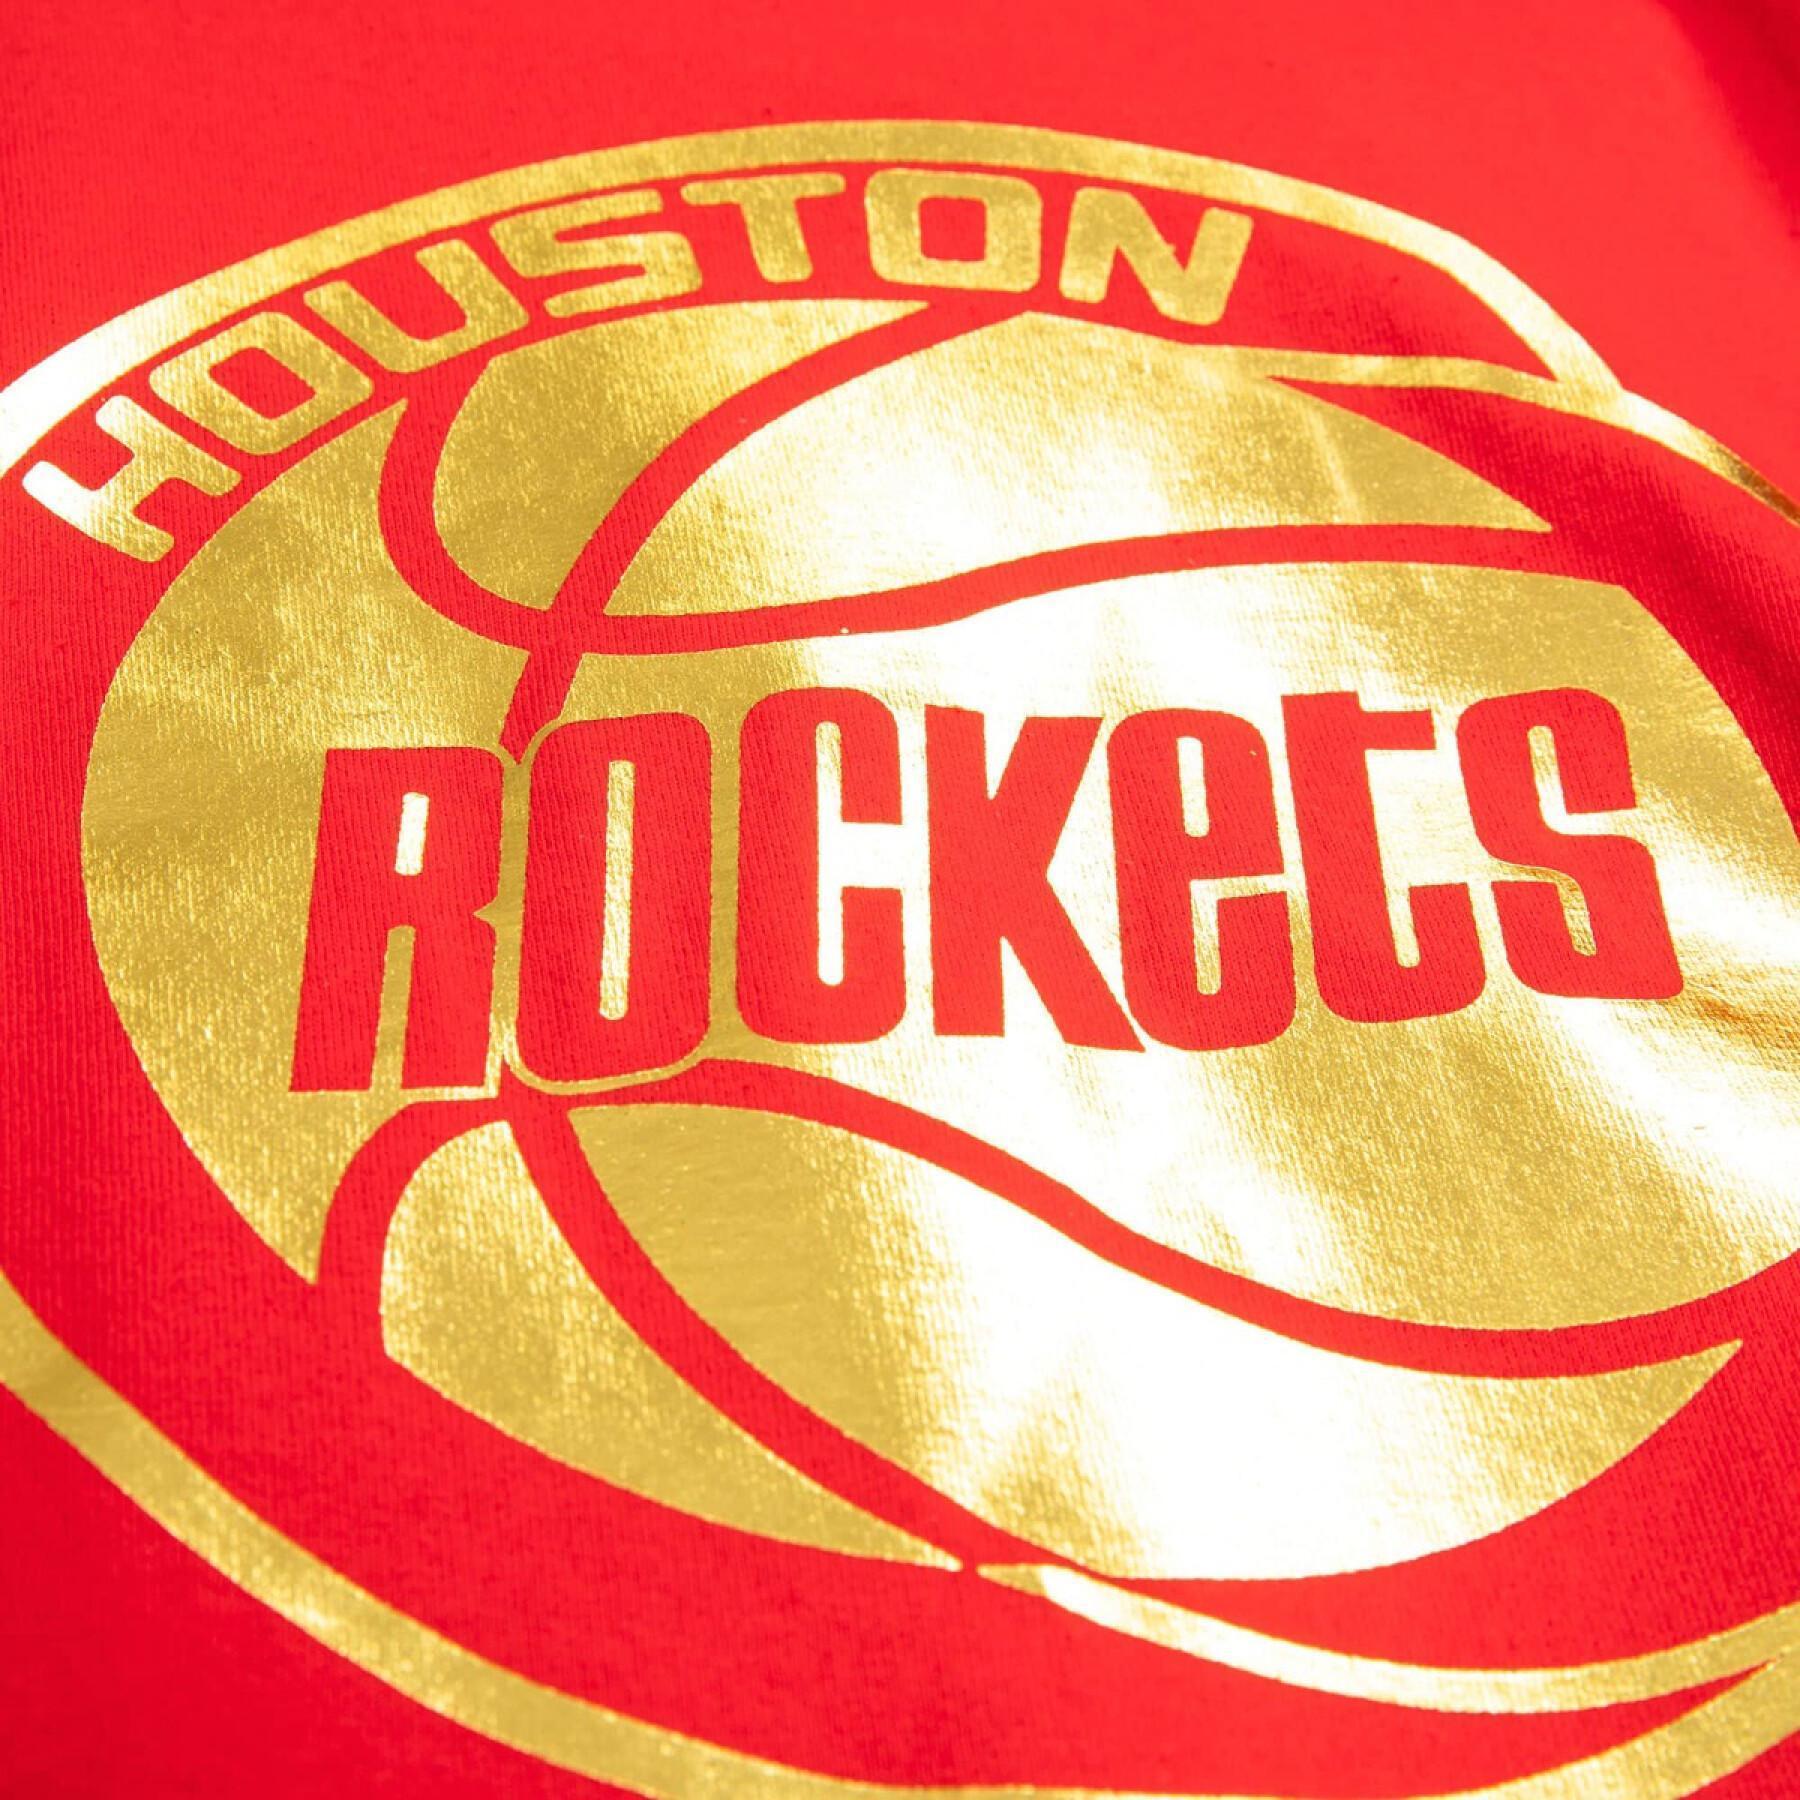 T-shirt Houston Rockets mida